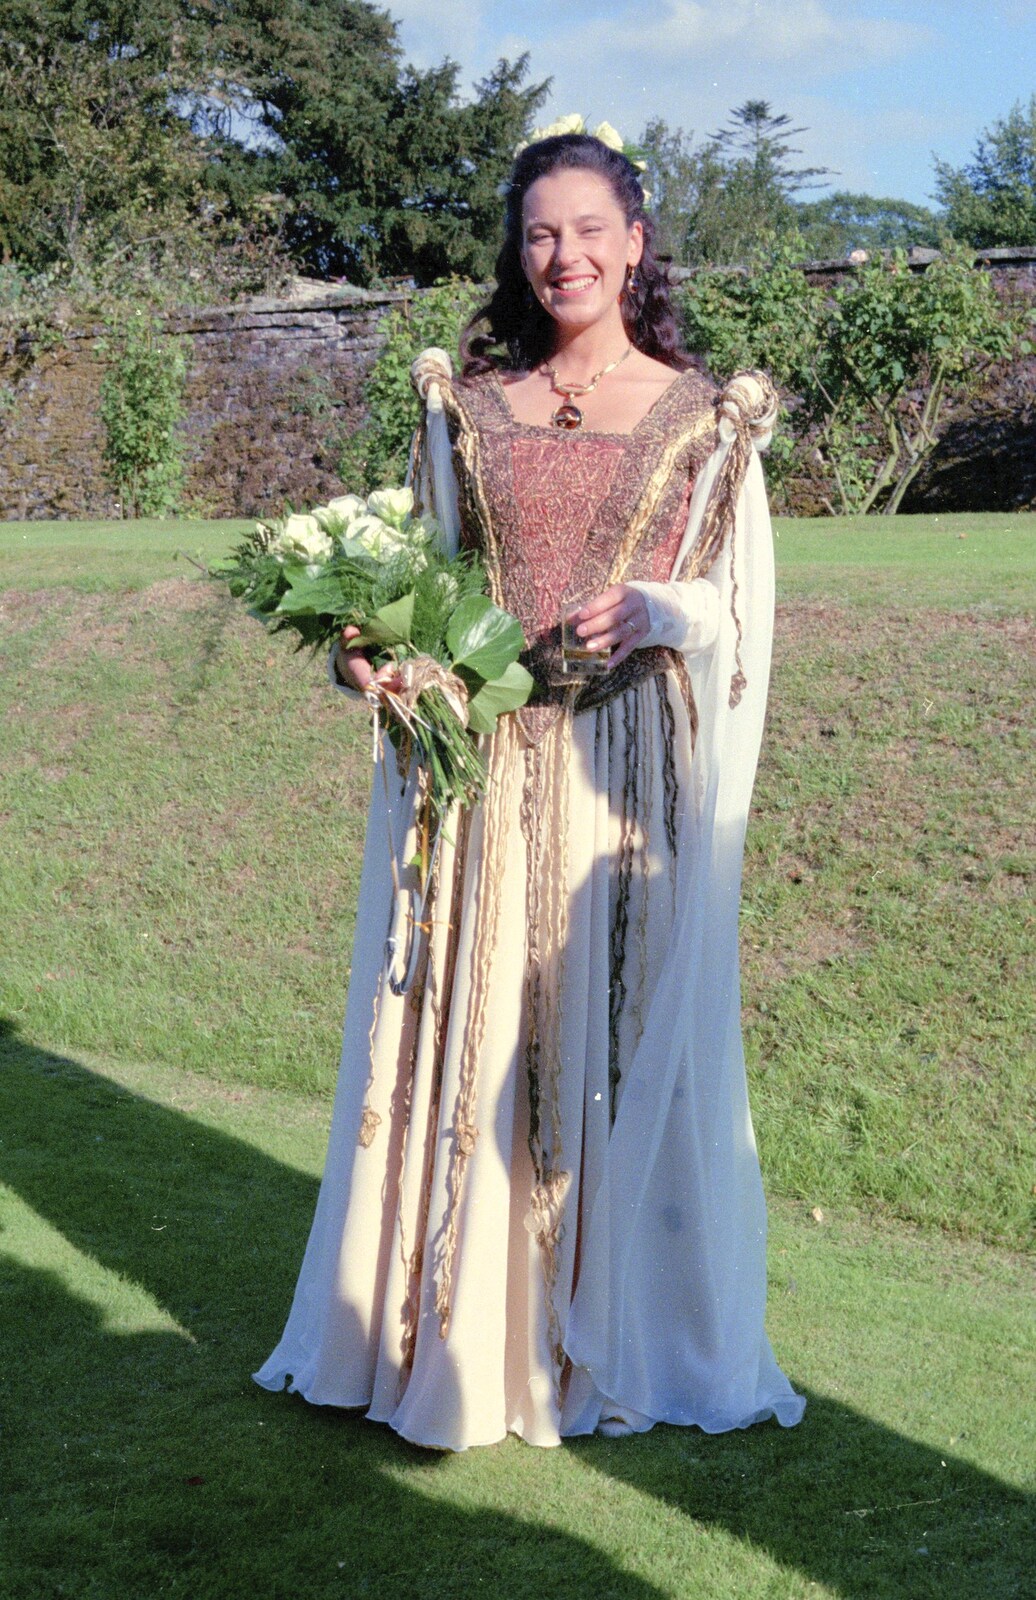 Stuart and Sarah's CISU Wedding, Naworth Castle, Brampton, Cumbria - 21st September 1996: Sarah's dress